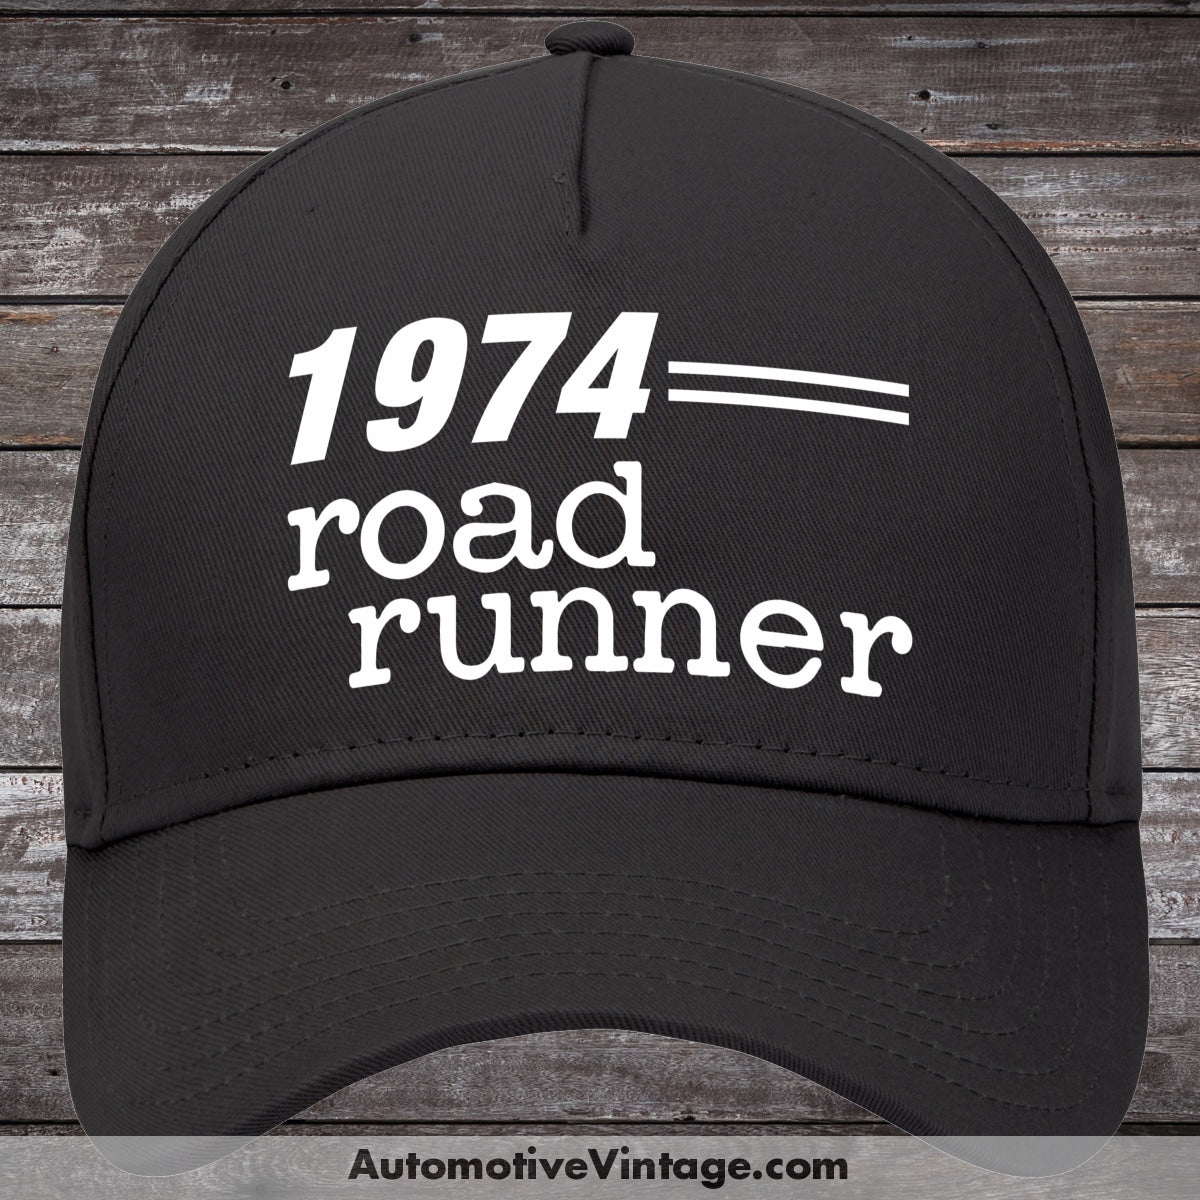 1974 Plymouth Road Runner Car Model Hat